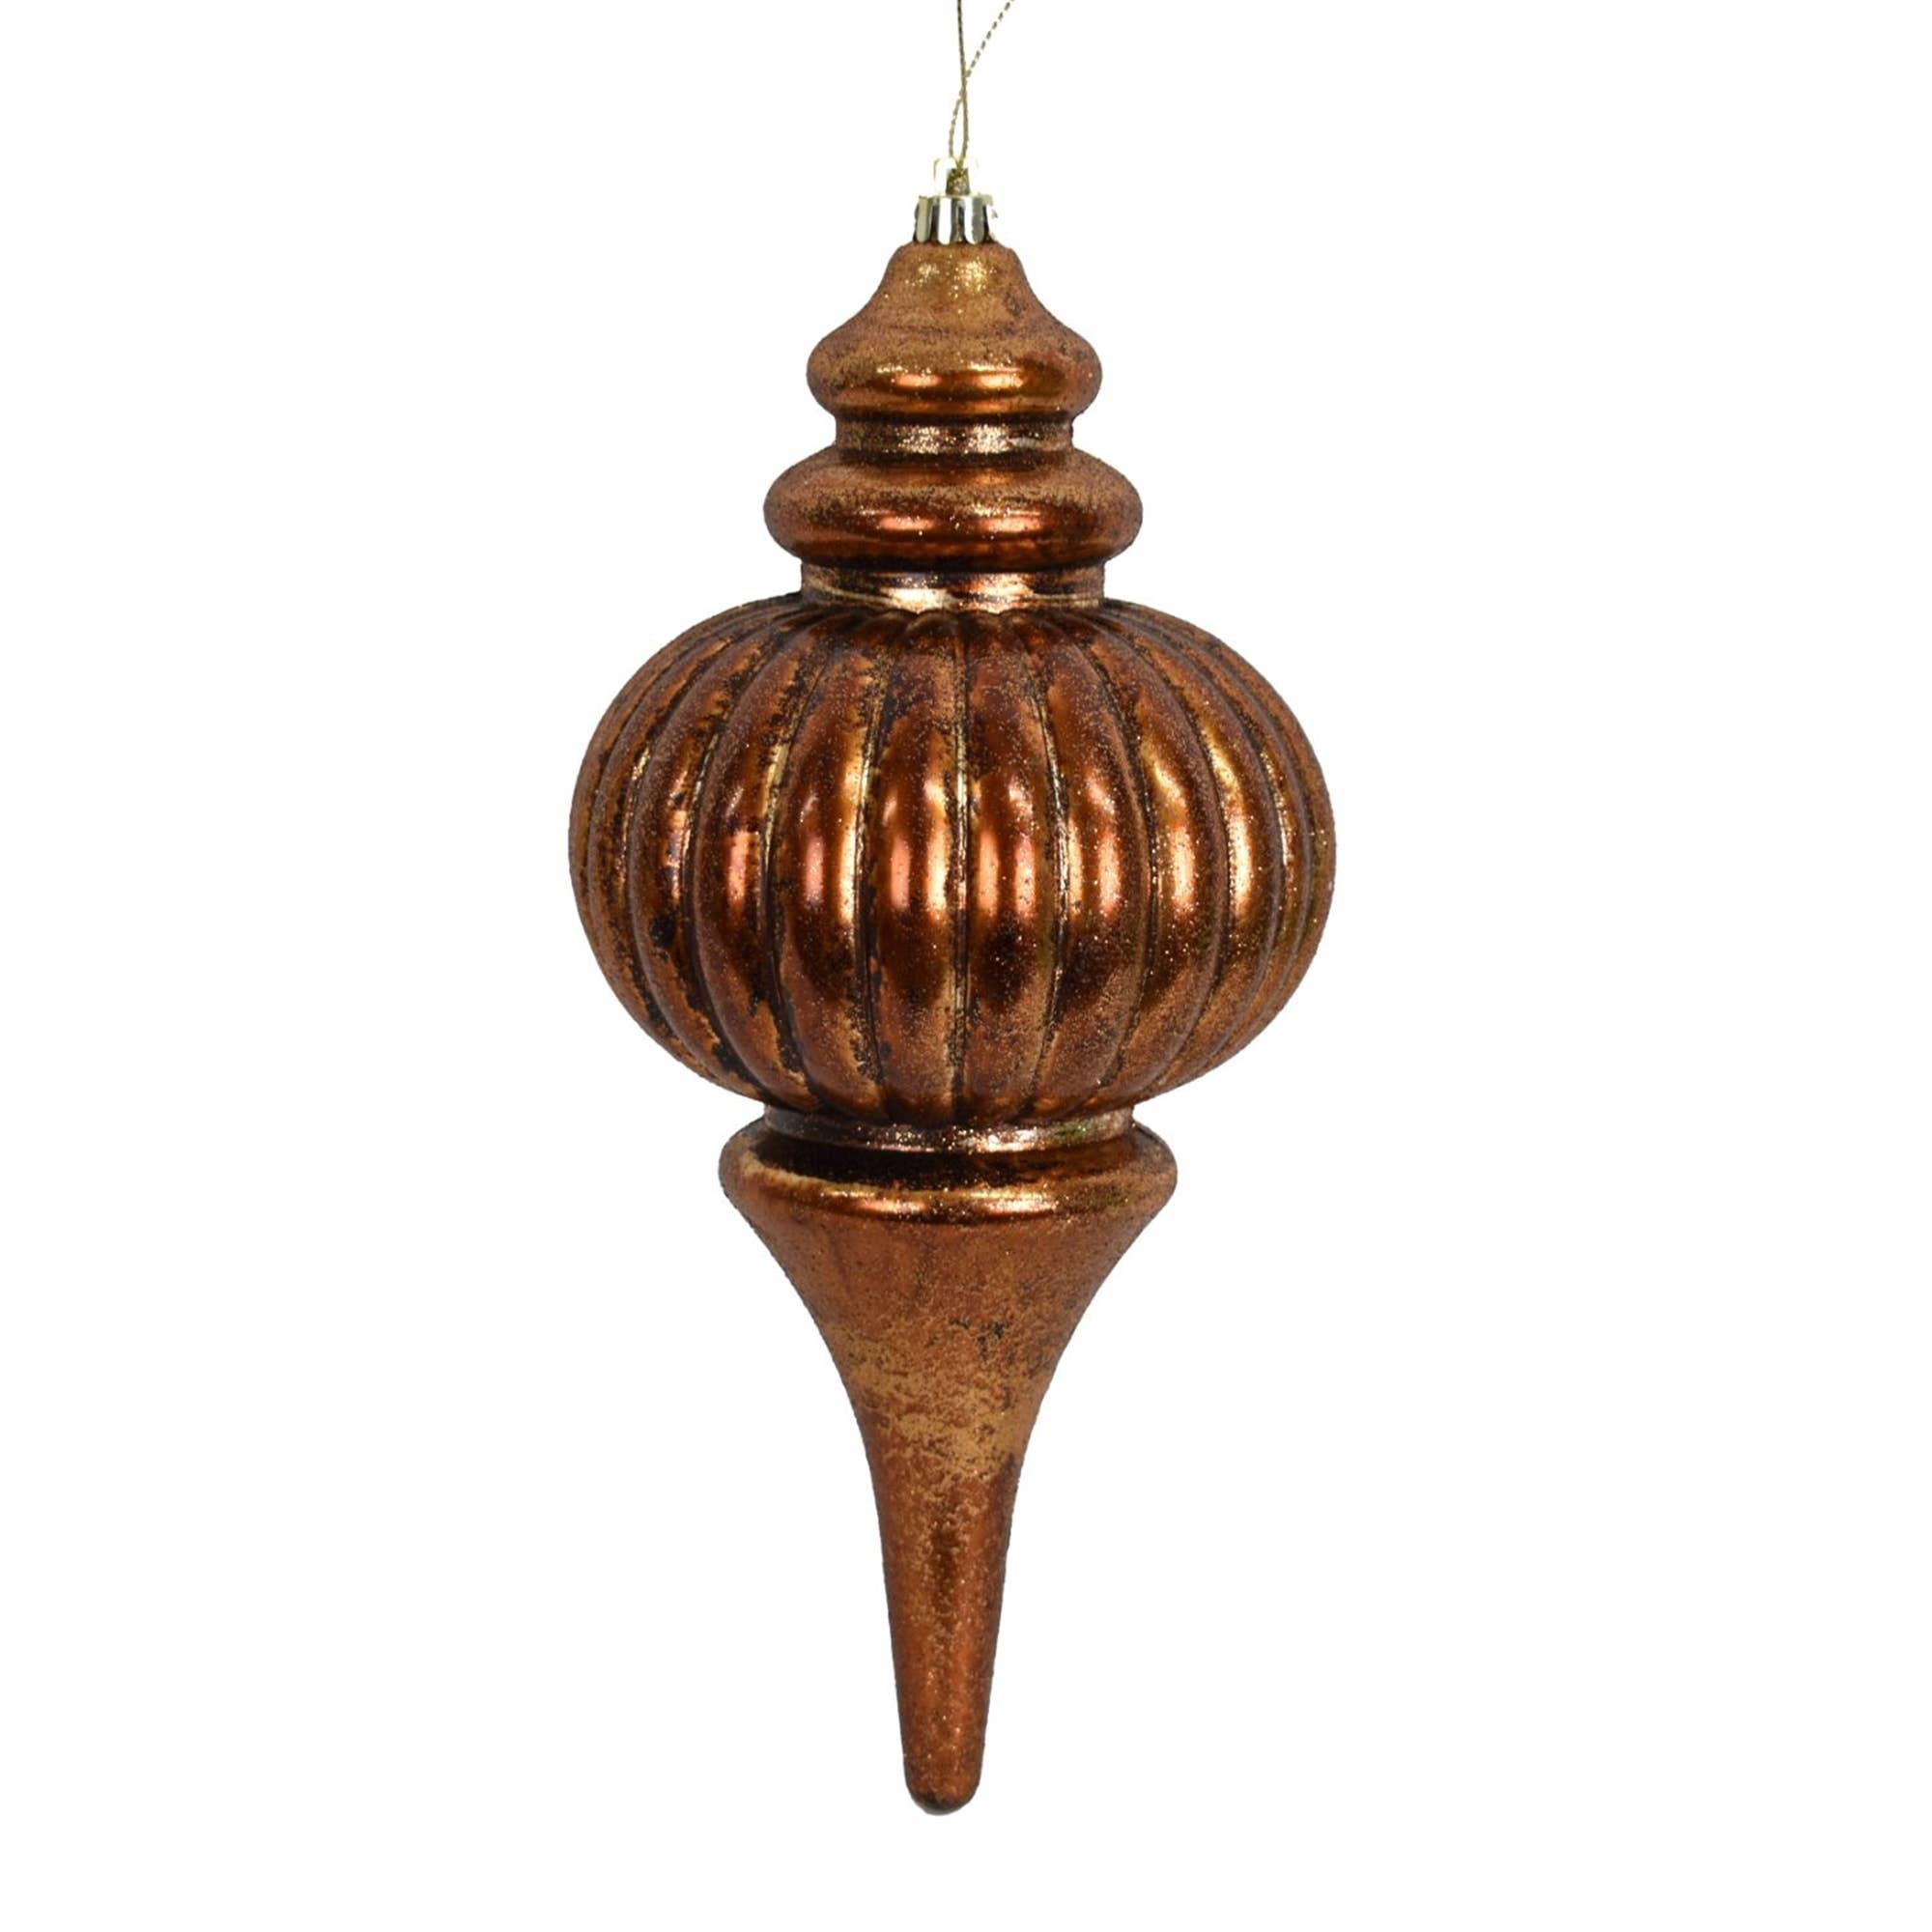 10" Antique Finial Ornament - Antique Copper